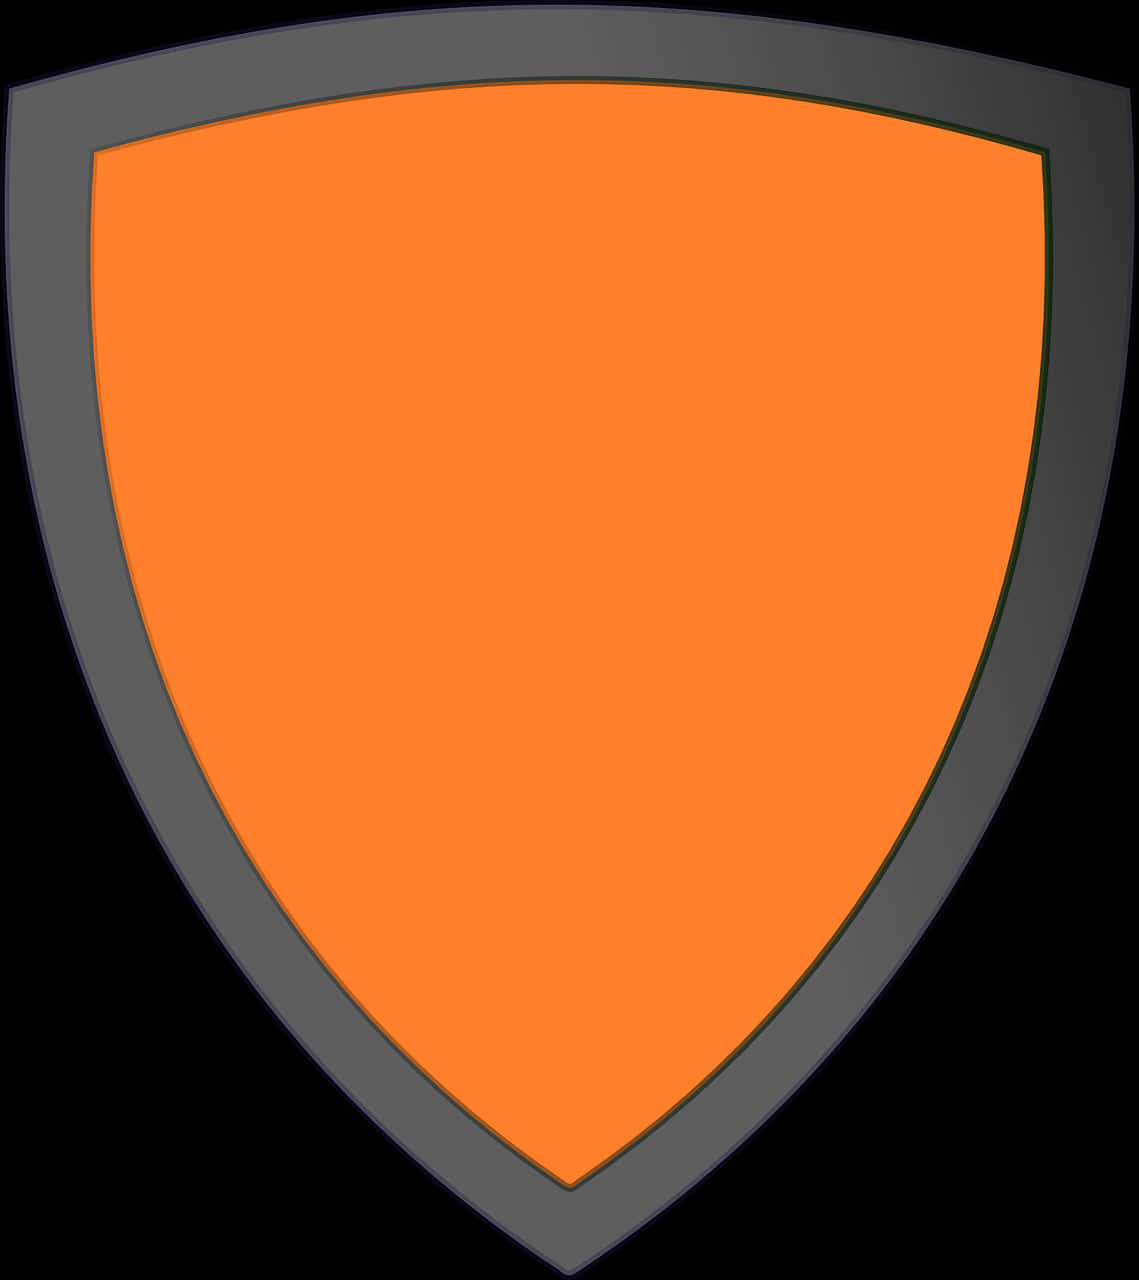 Orange Black Shield Graphic